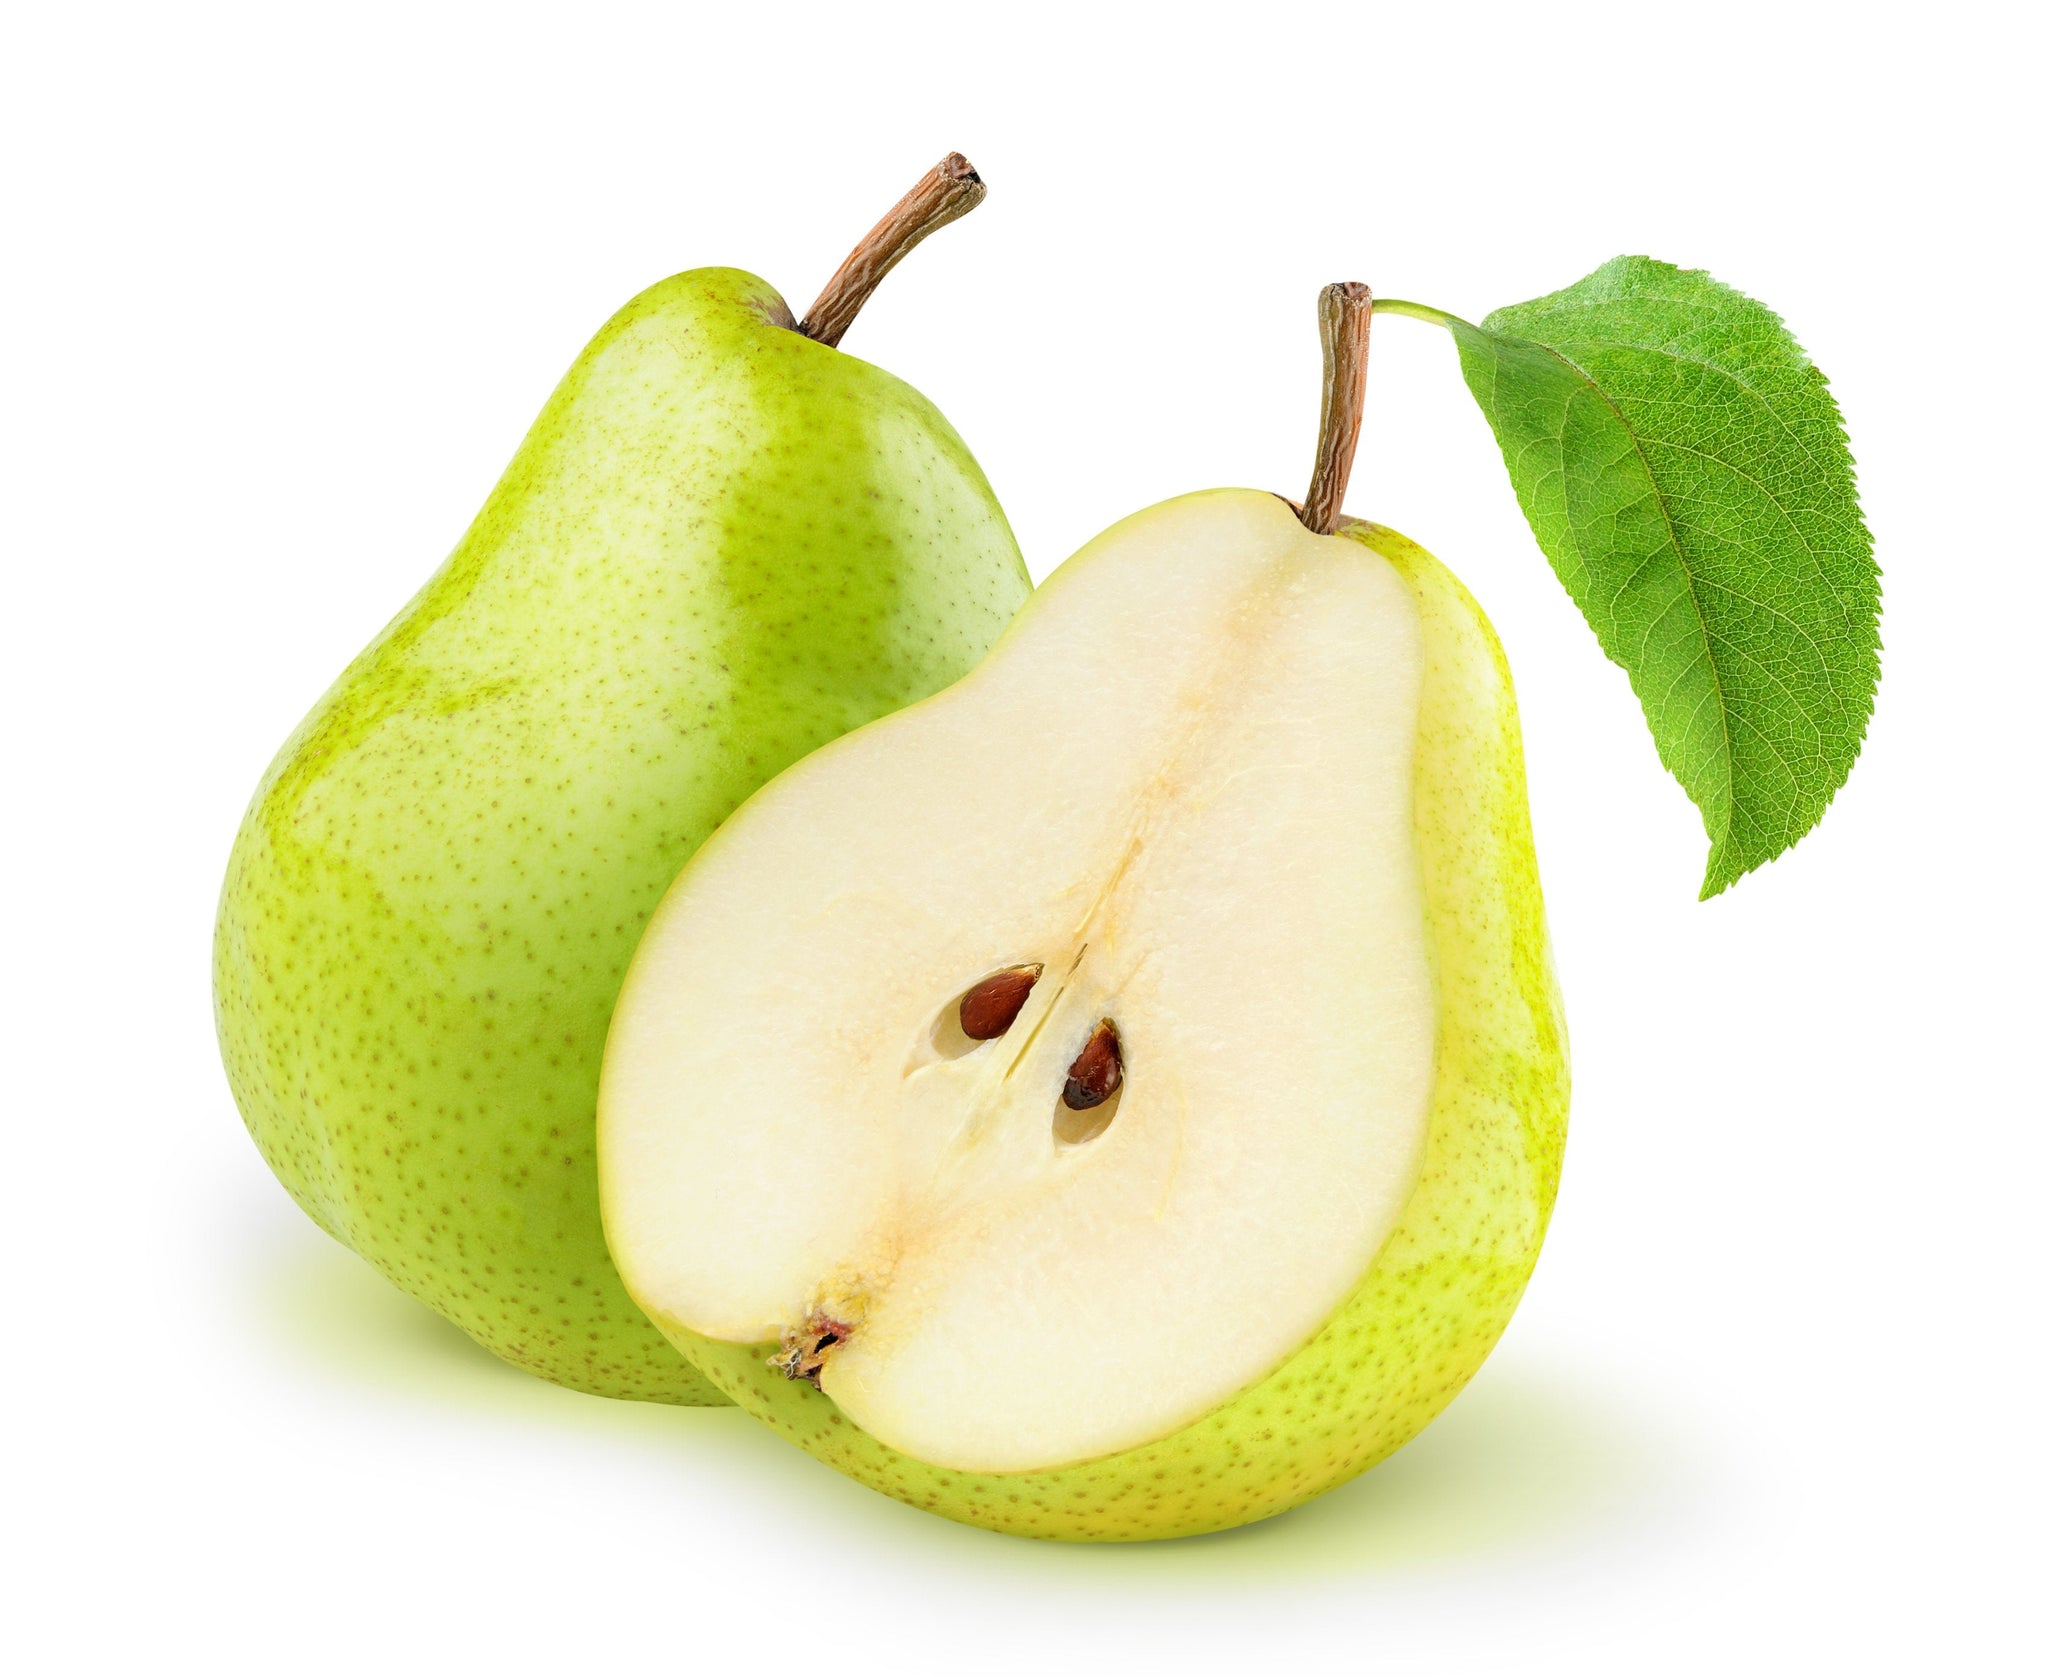 aba>Pears, one